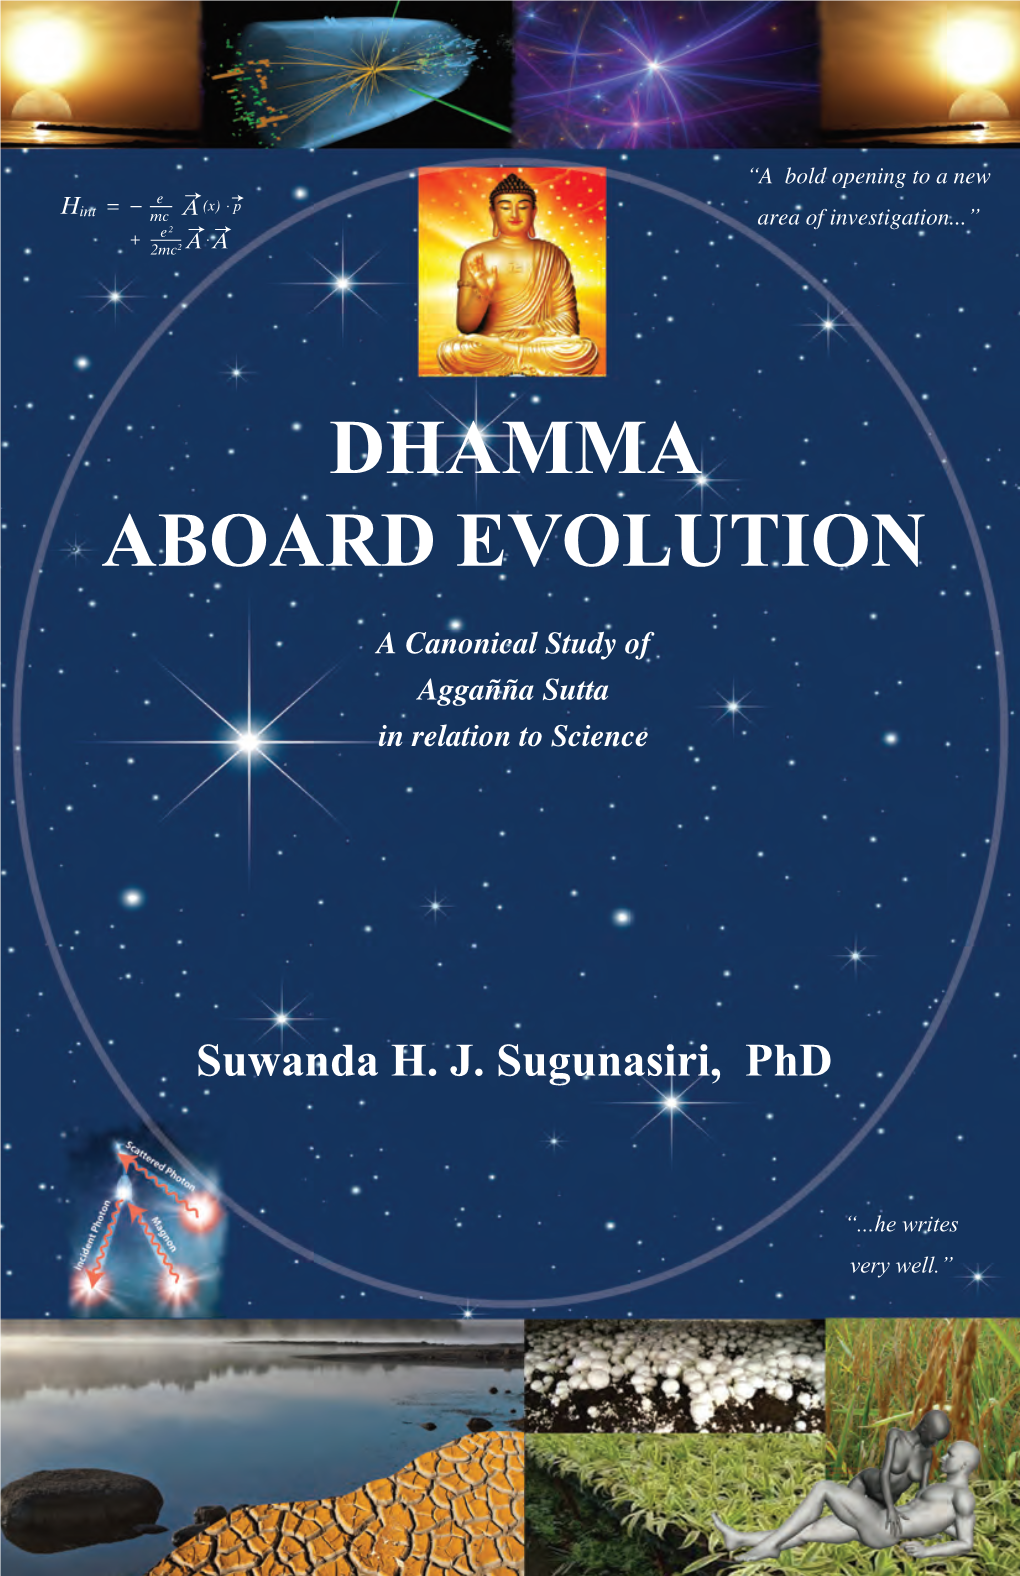 Dhamma ABOARD Evolution